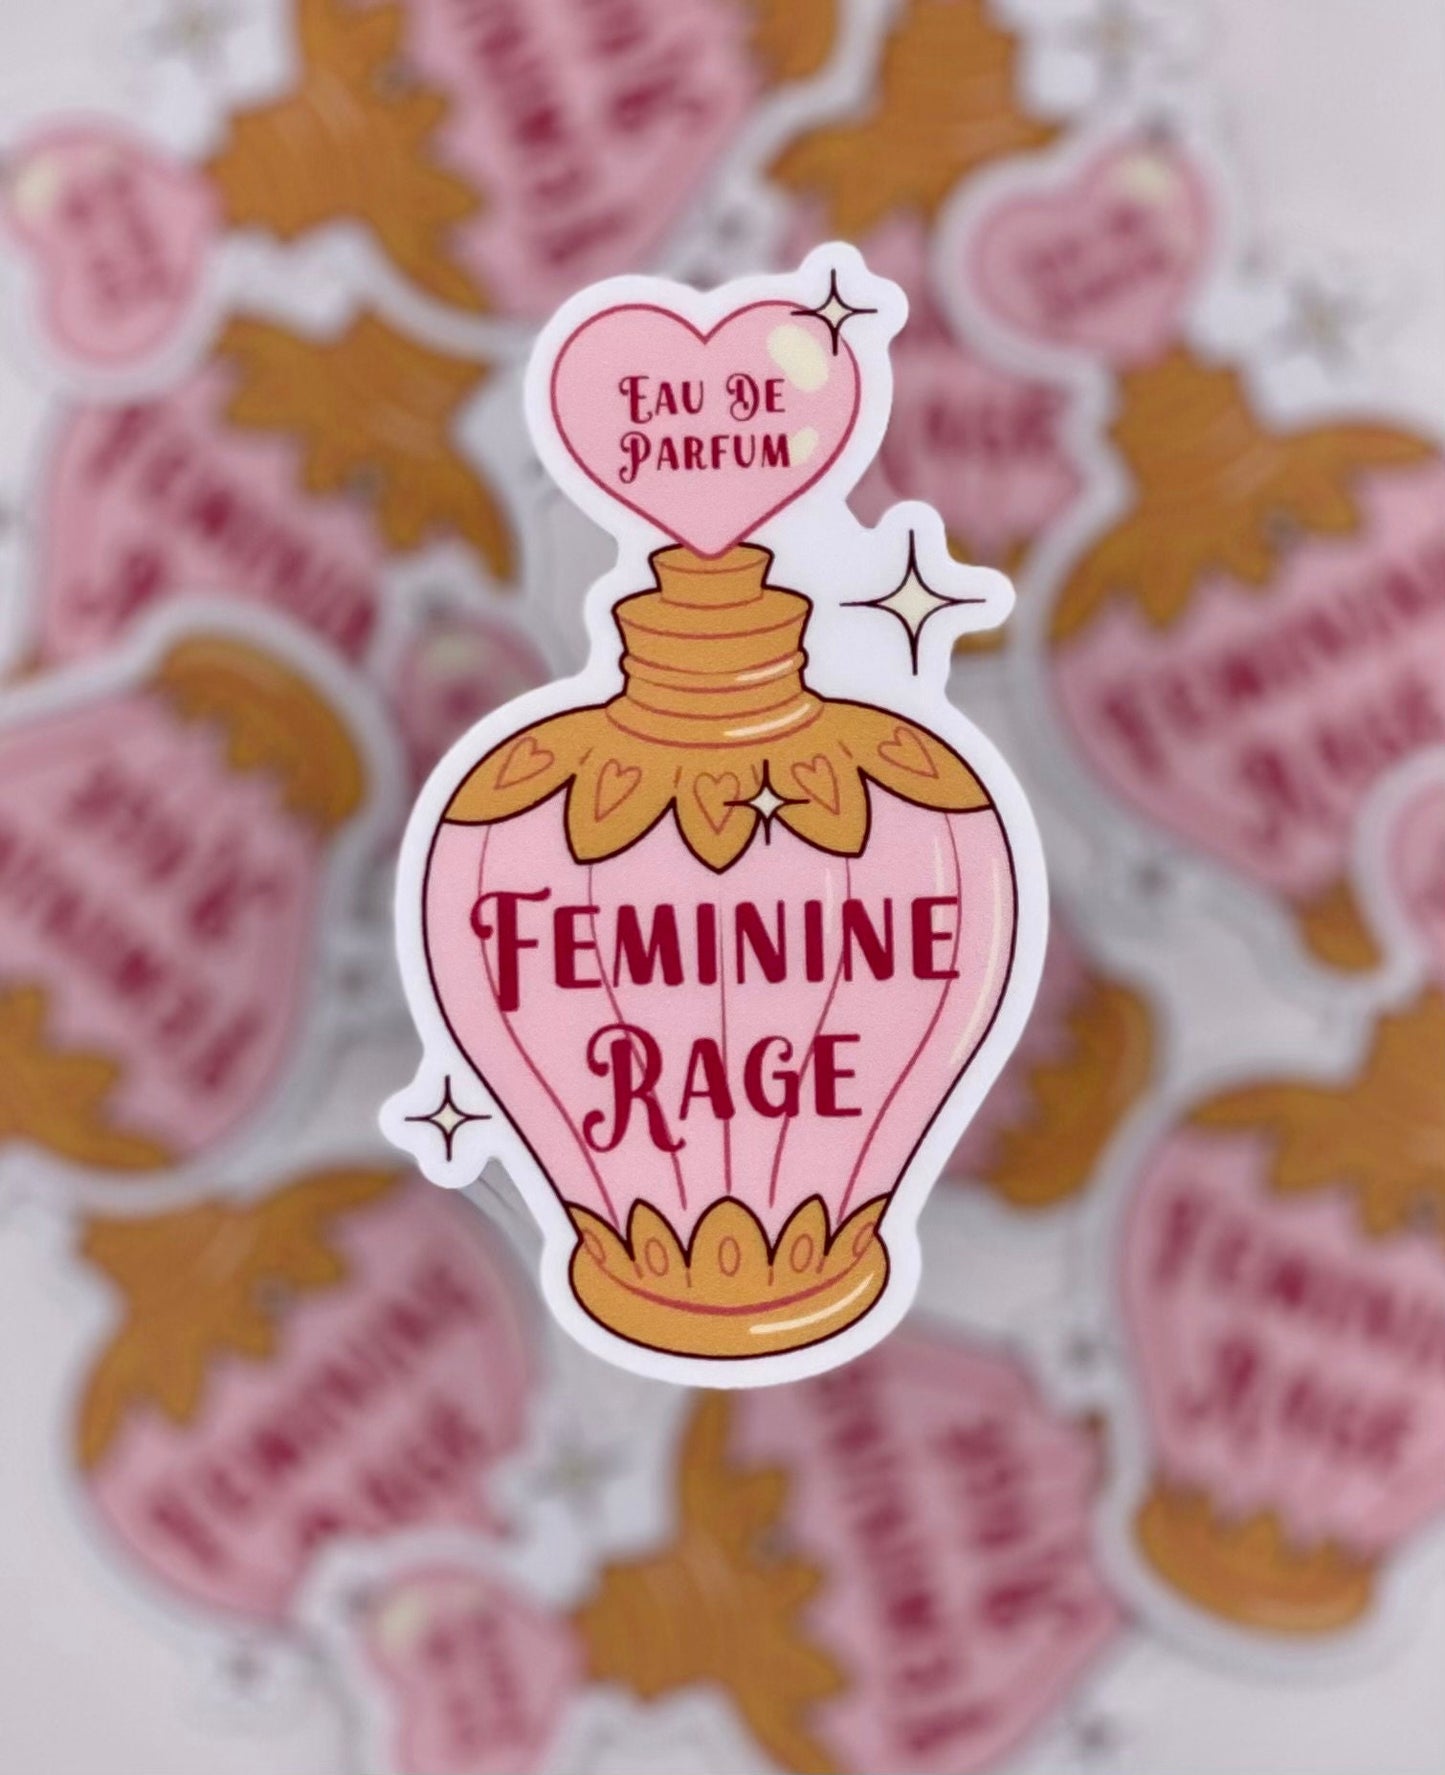 Feminine Rage Perfume Sticker | Feminist Stickers